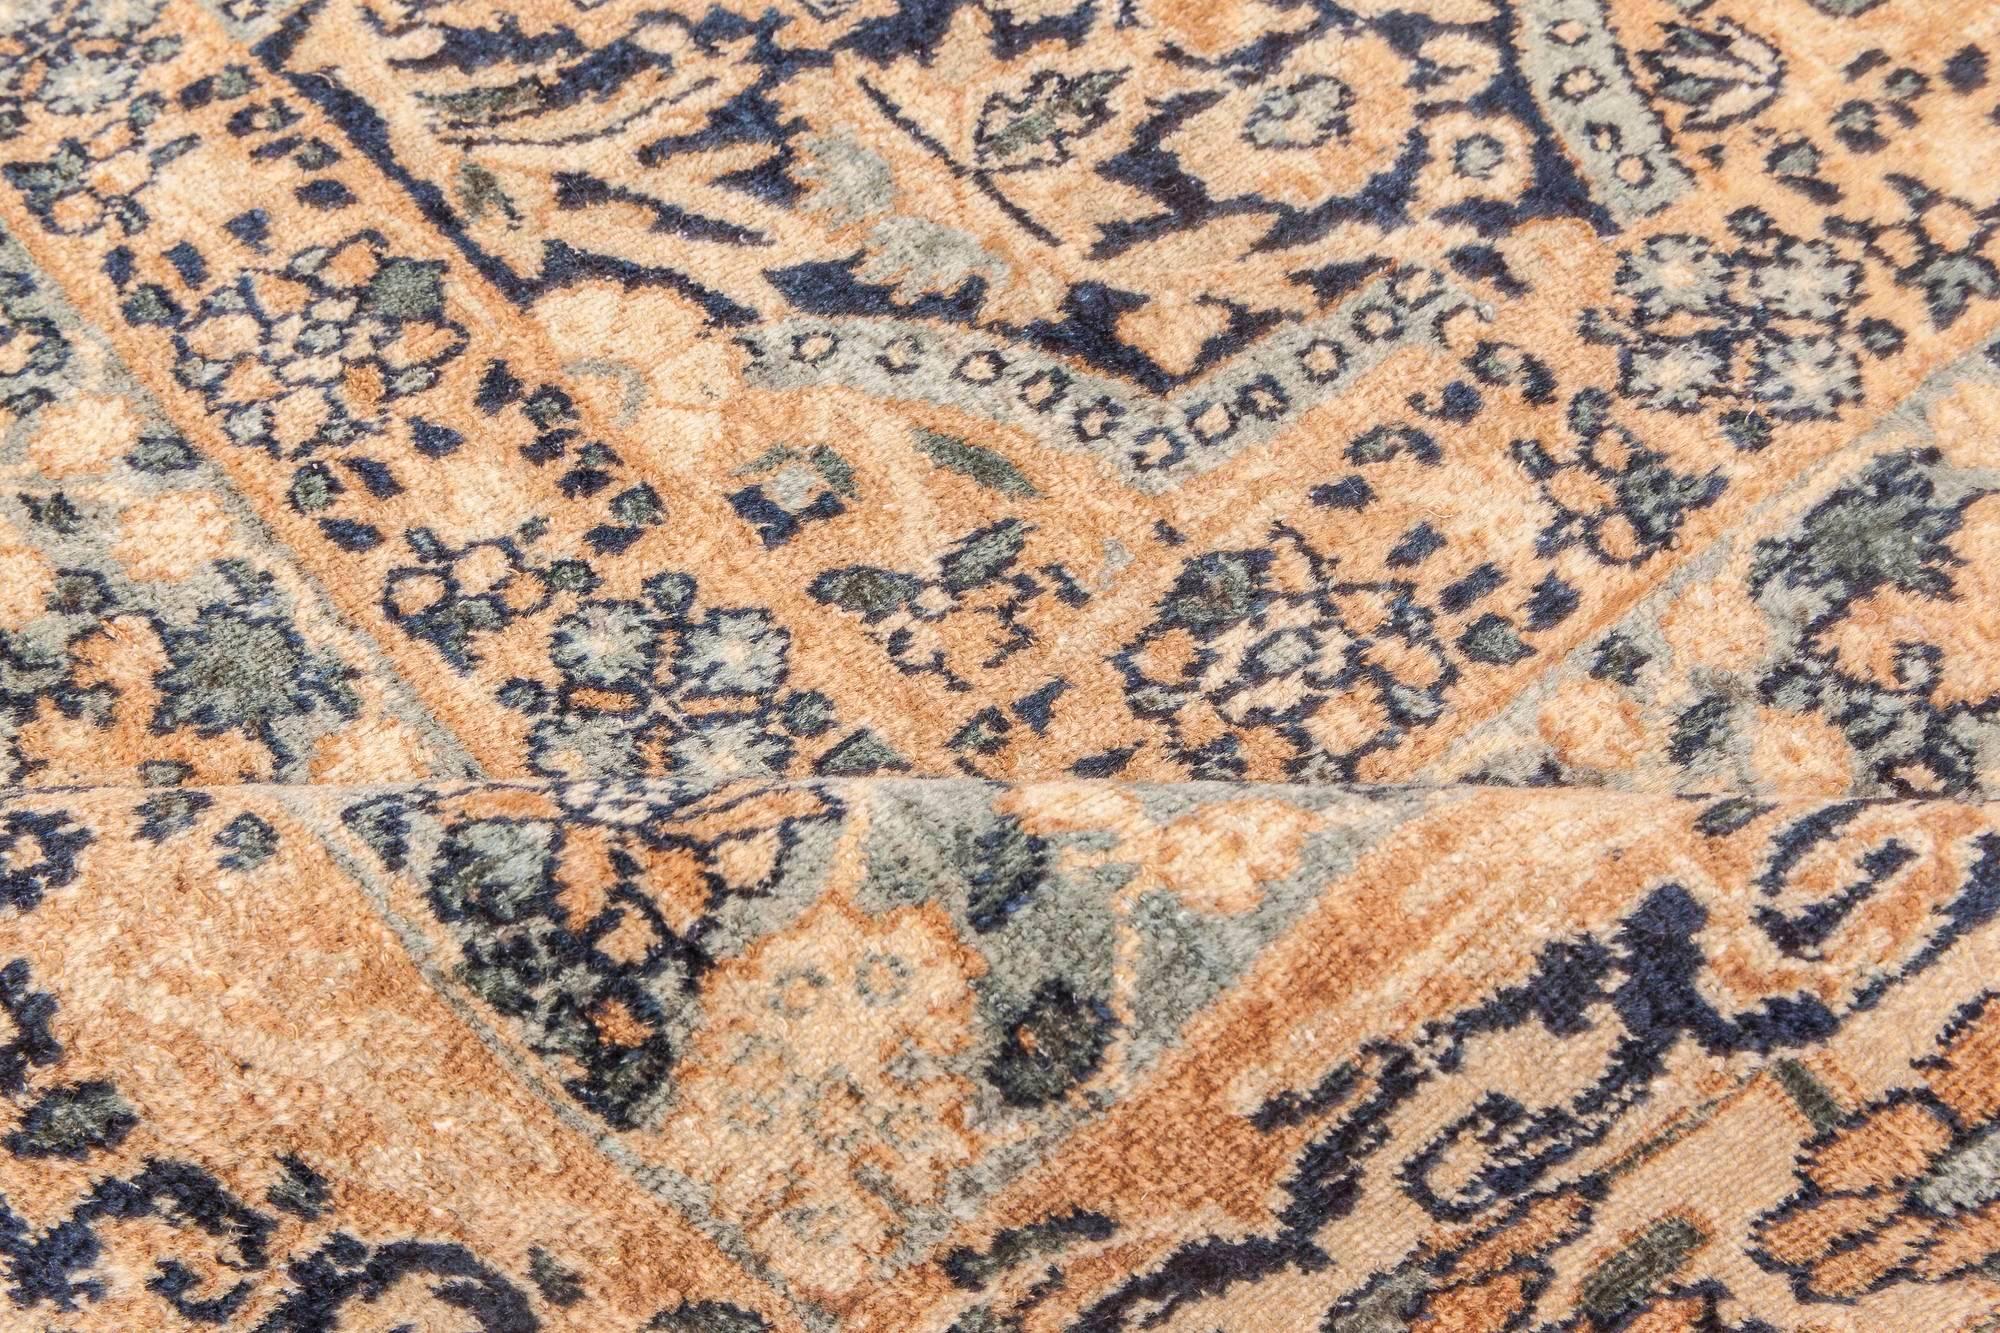 Early 20th century Persian Kirman rug
Size: 11'0